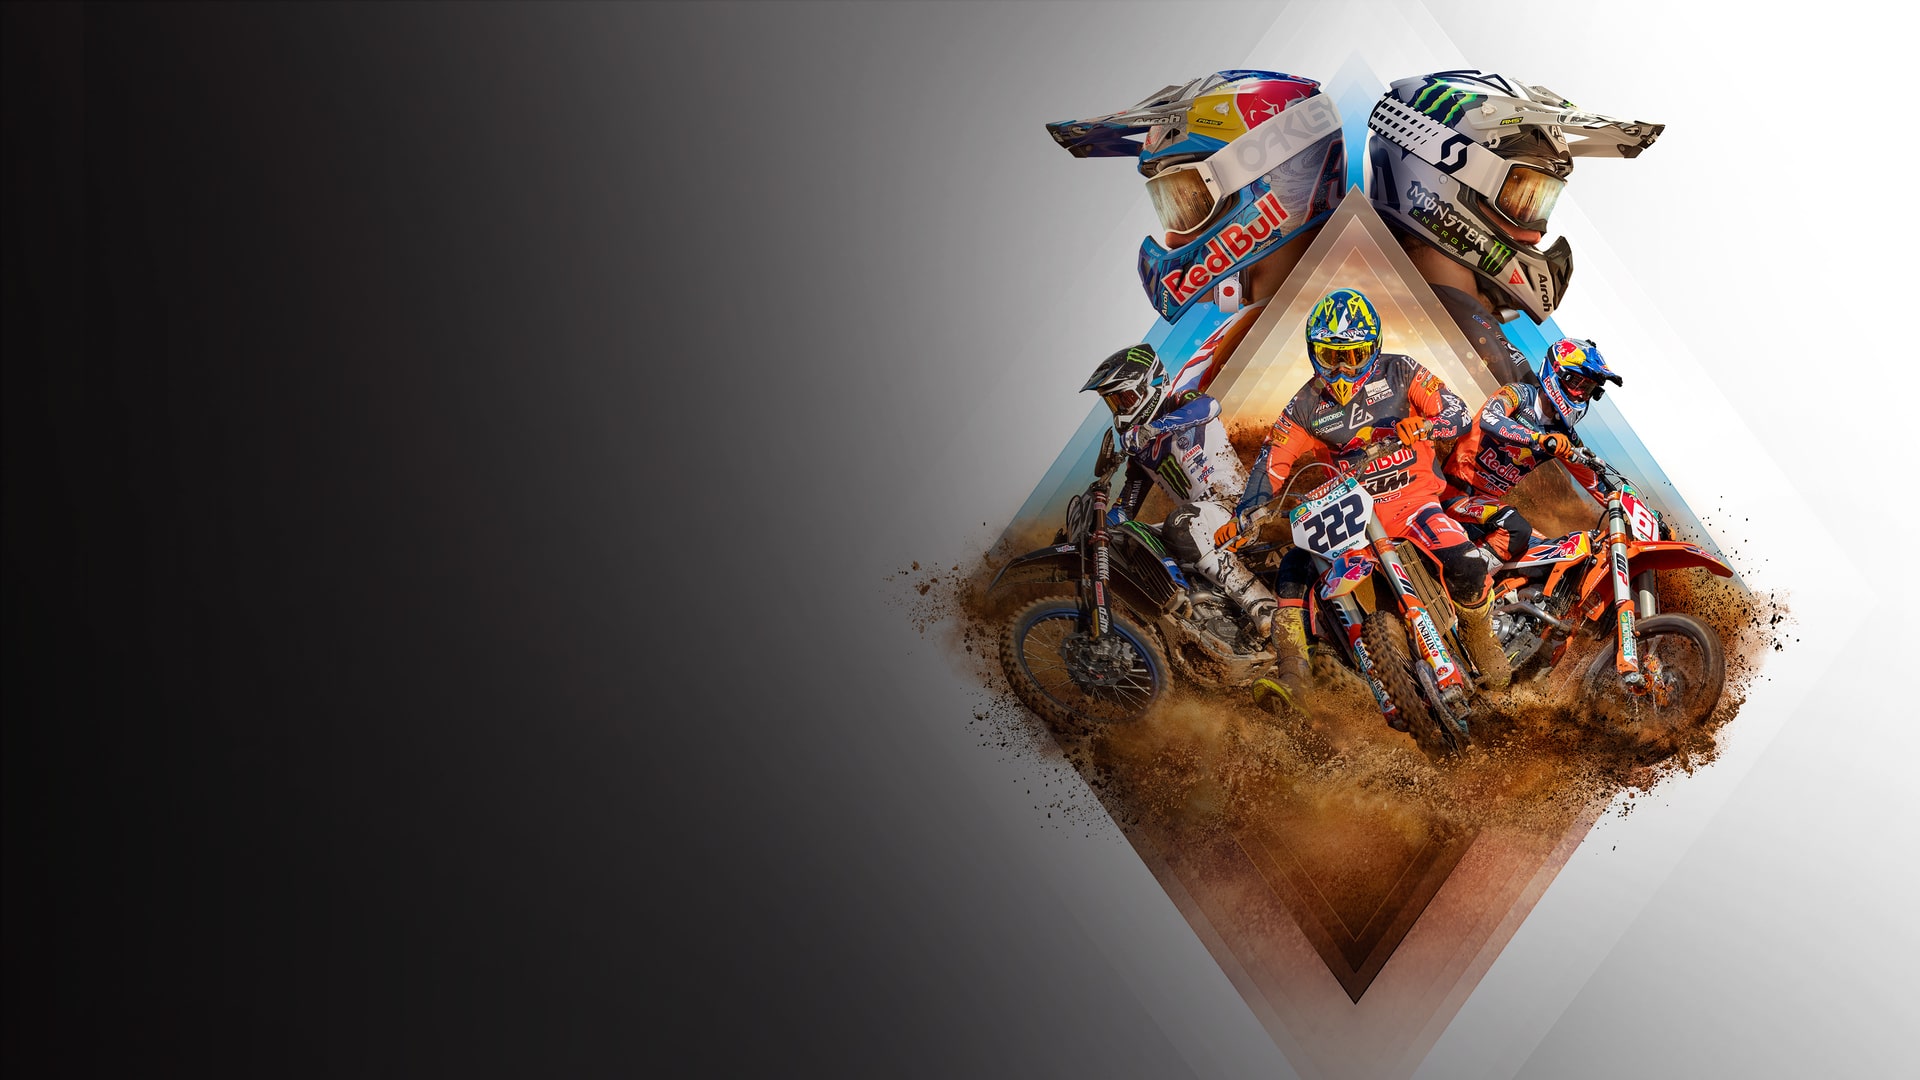 MXGP 2019 - The Official Motocross Videogame (English)